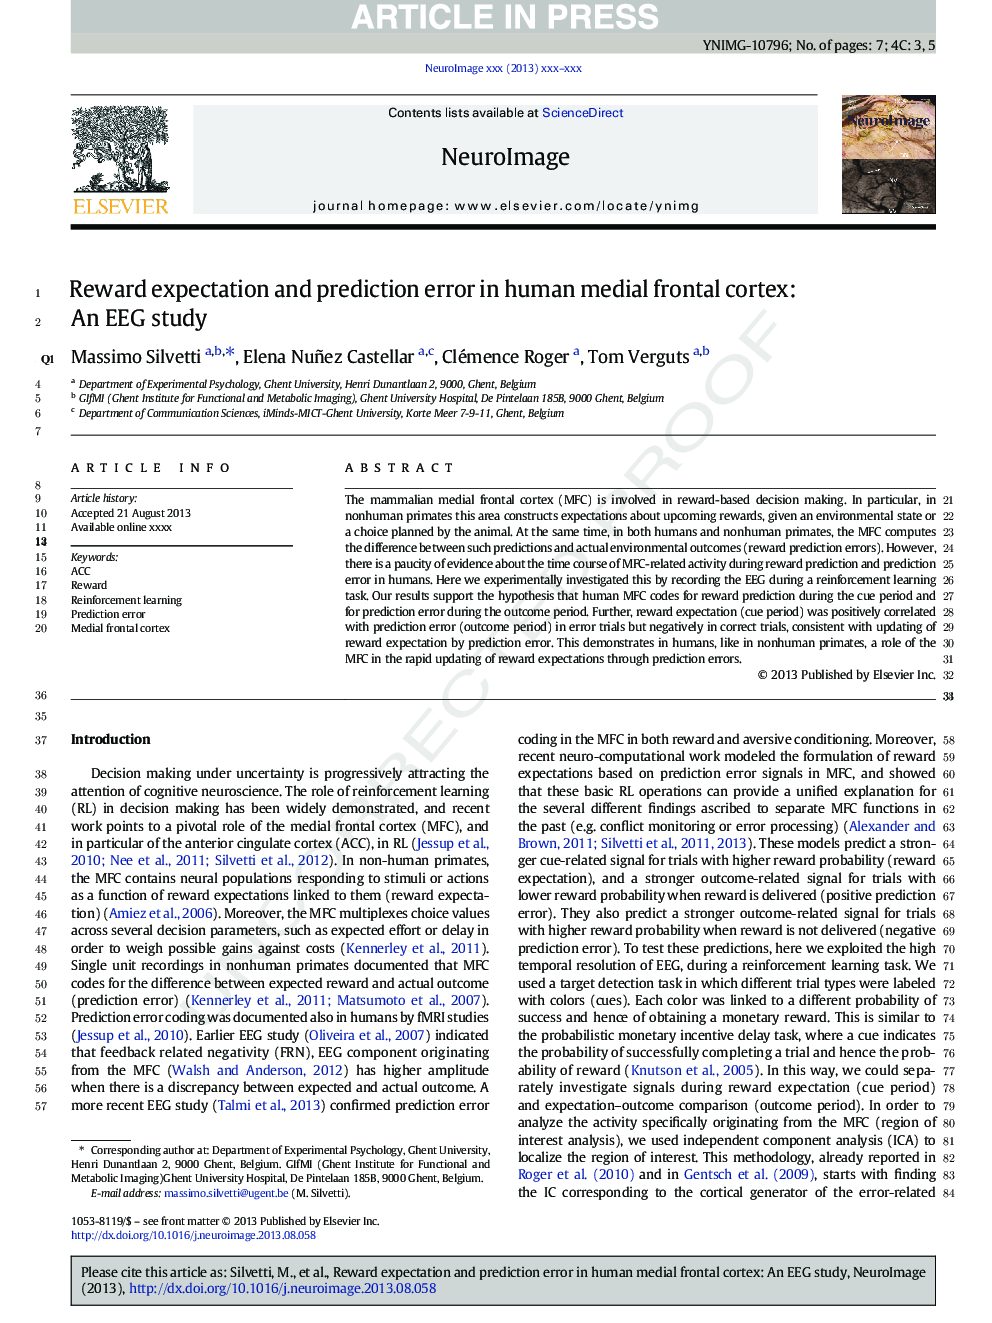 Reward expectation and prediction error in human medial frontal cortex: An EEG study